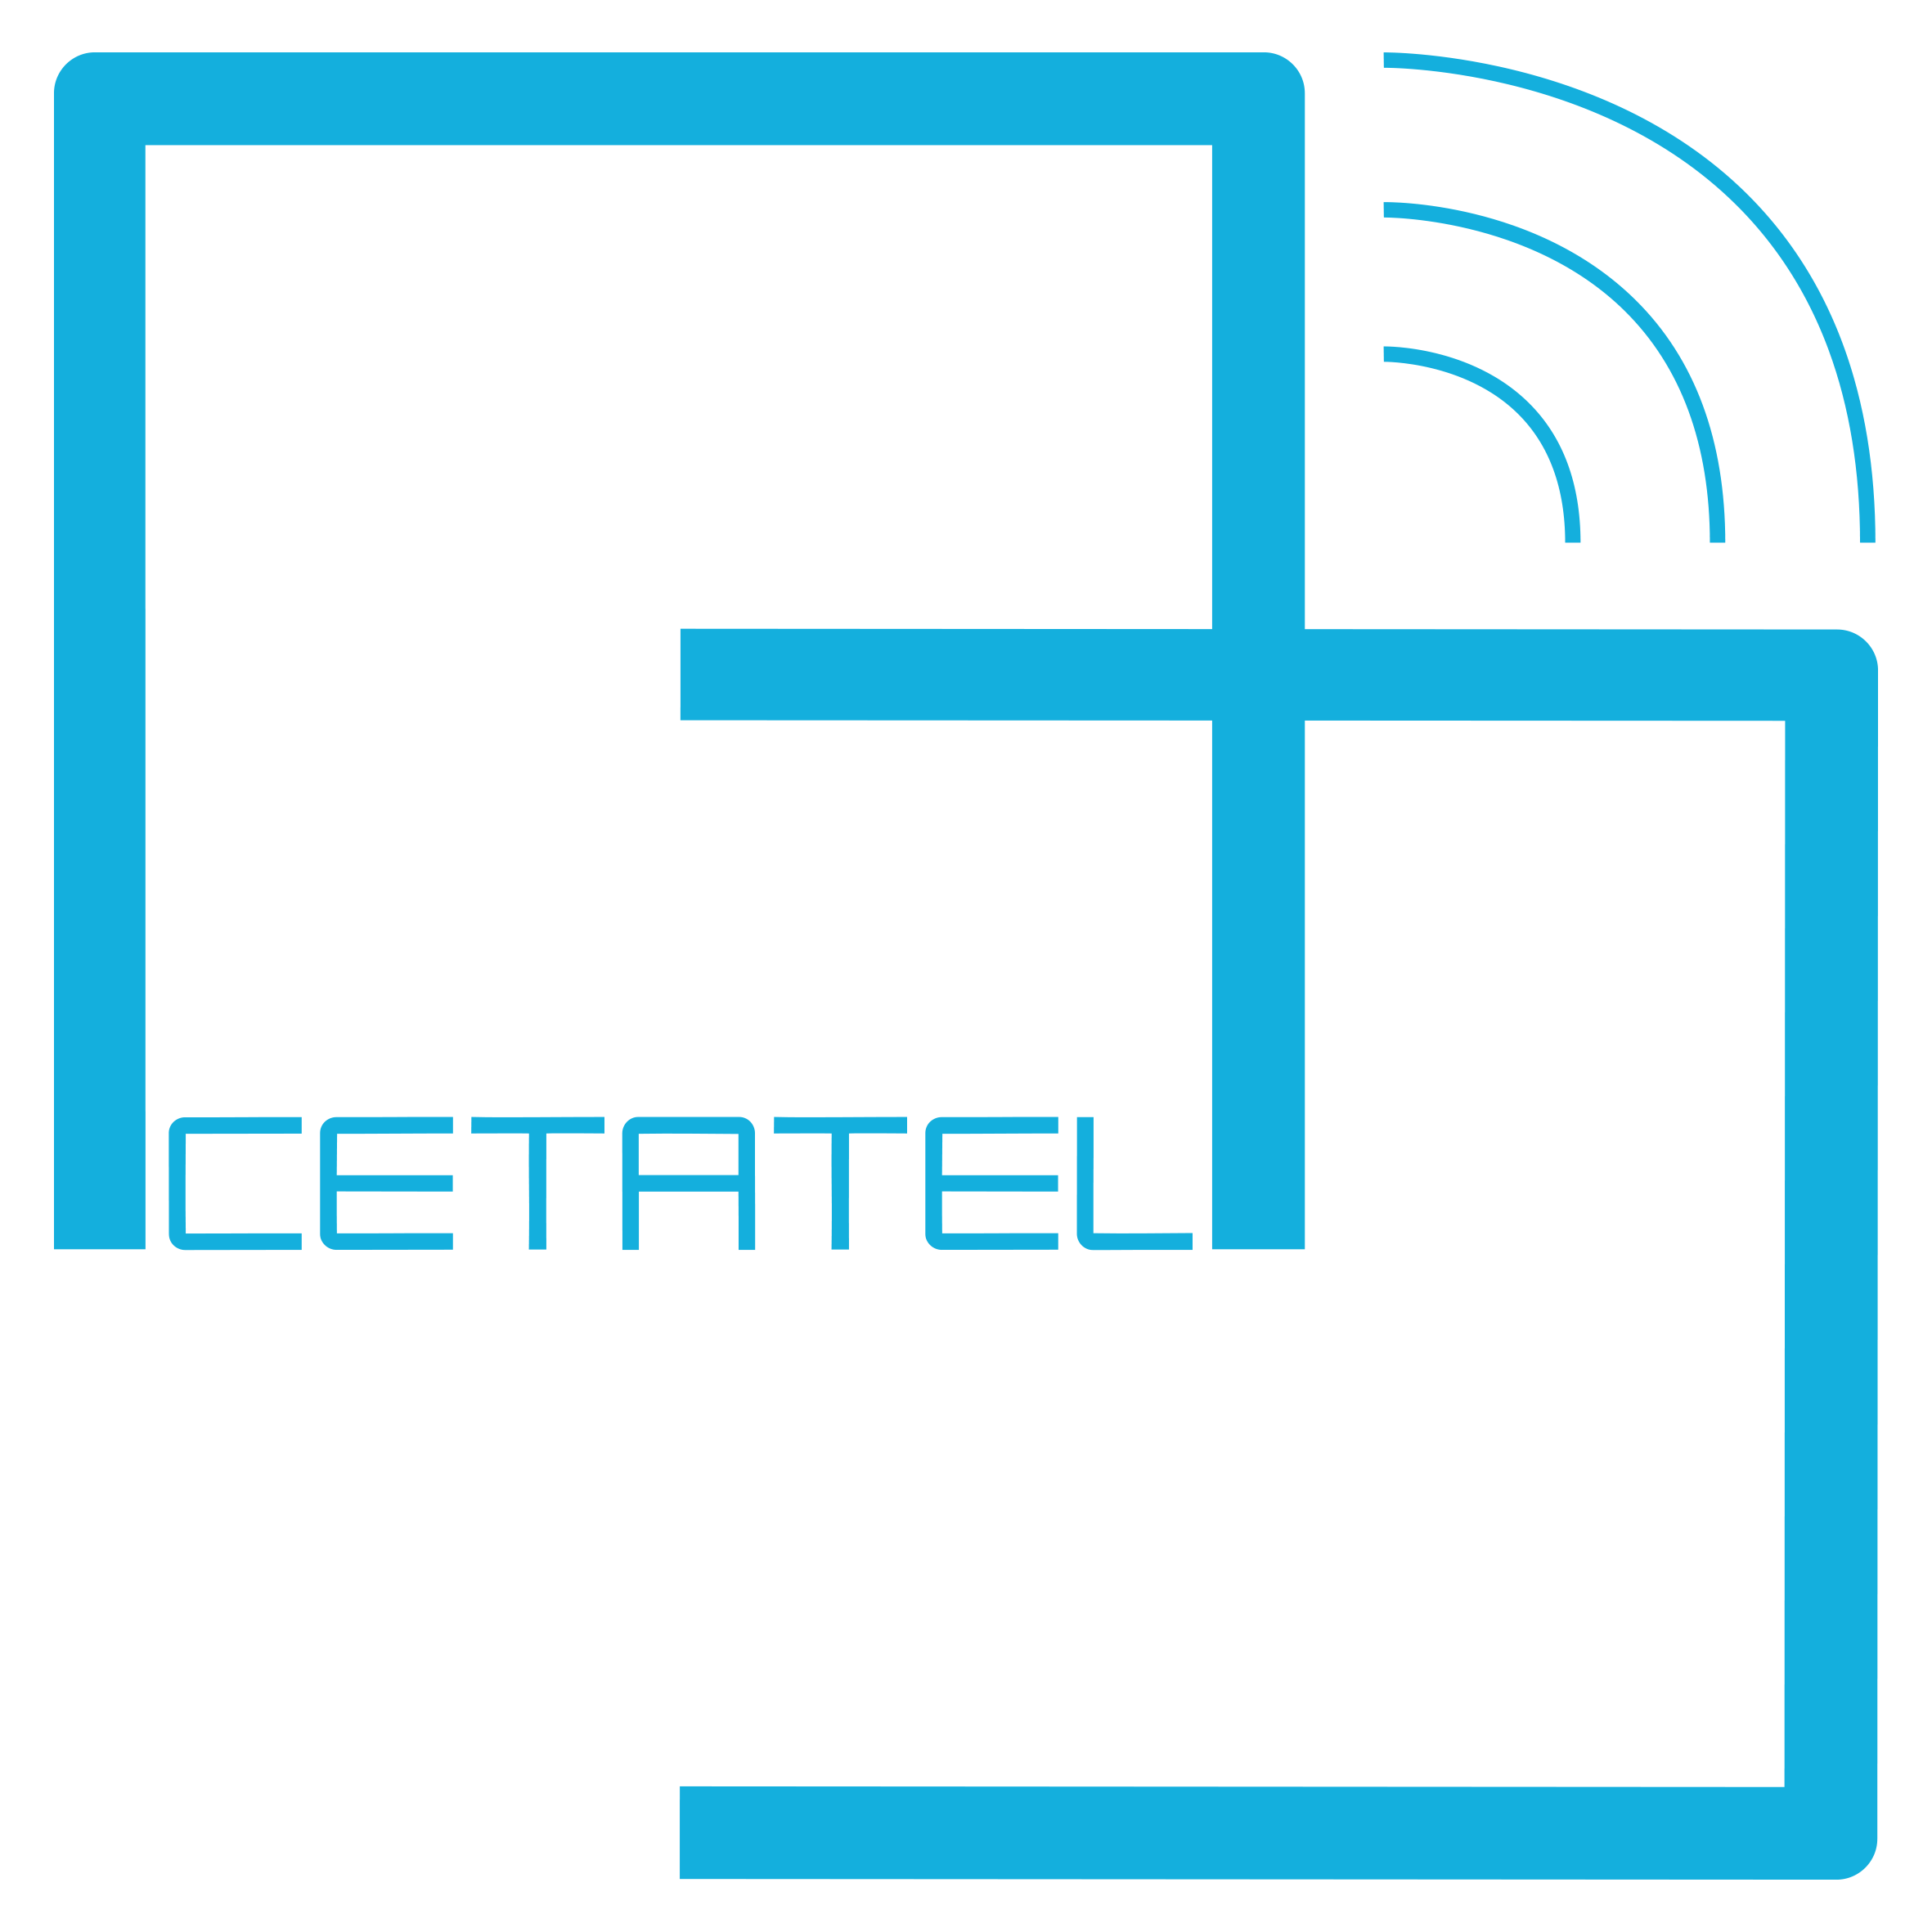 Logo CETATEL